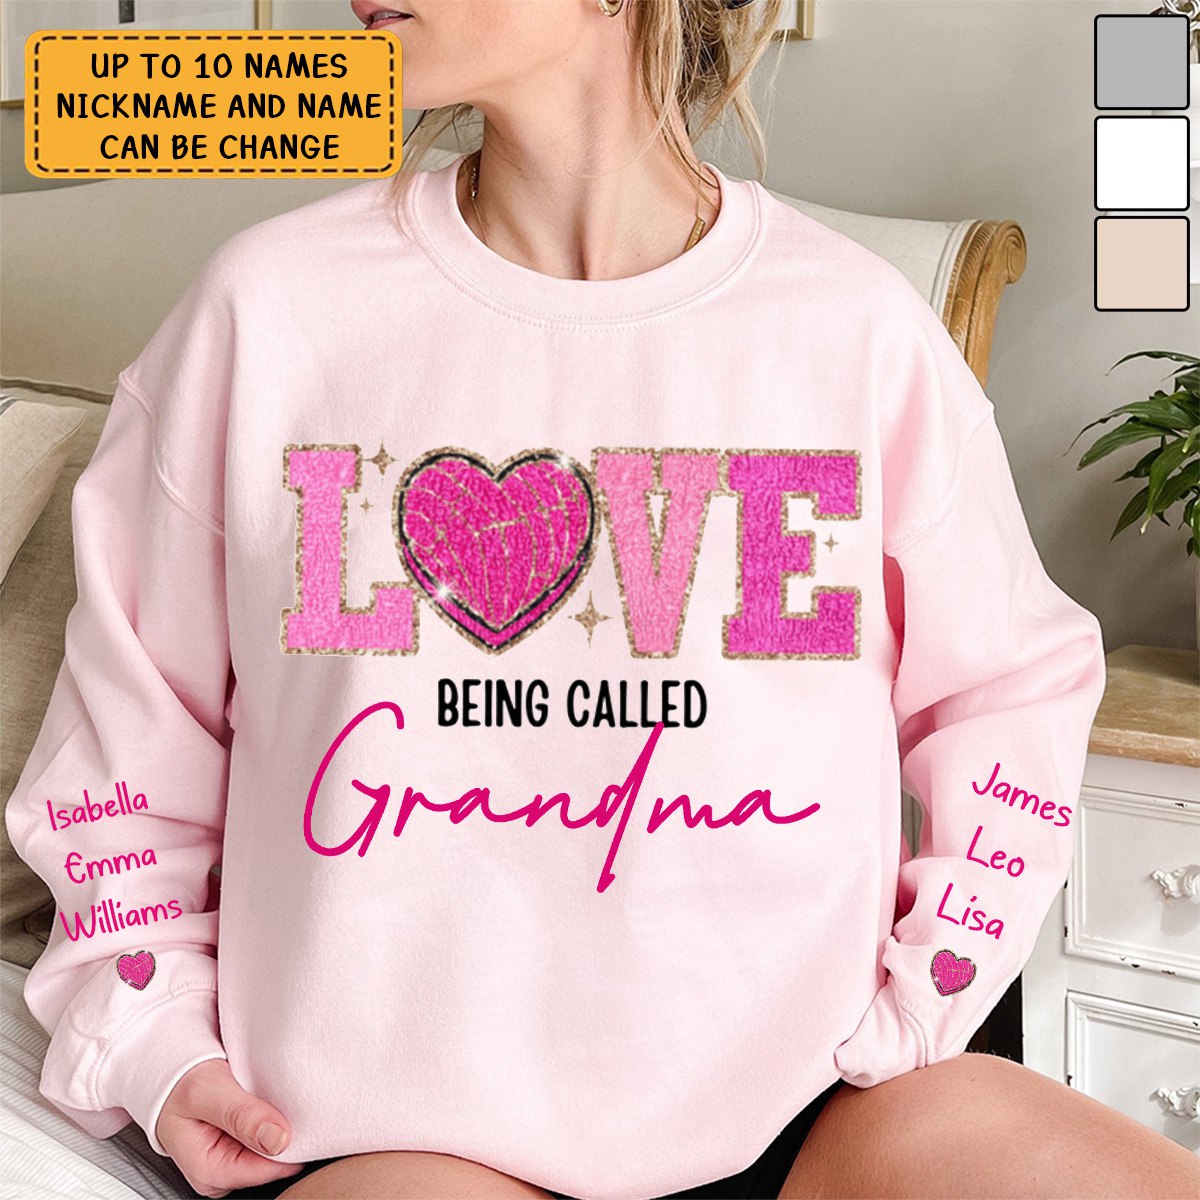 Love Being Called Grandma Pink Glitter Love Personalized Sweatshirt